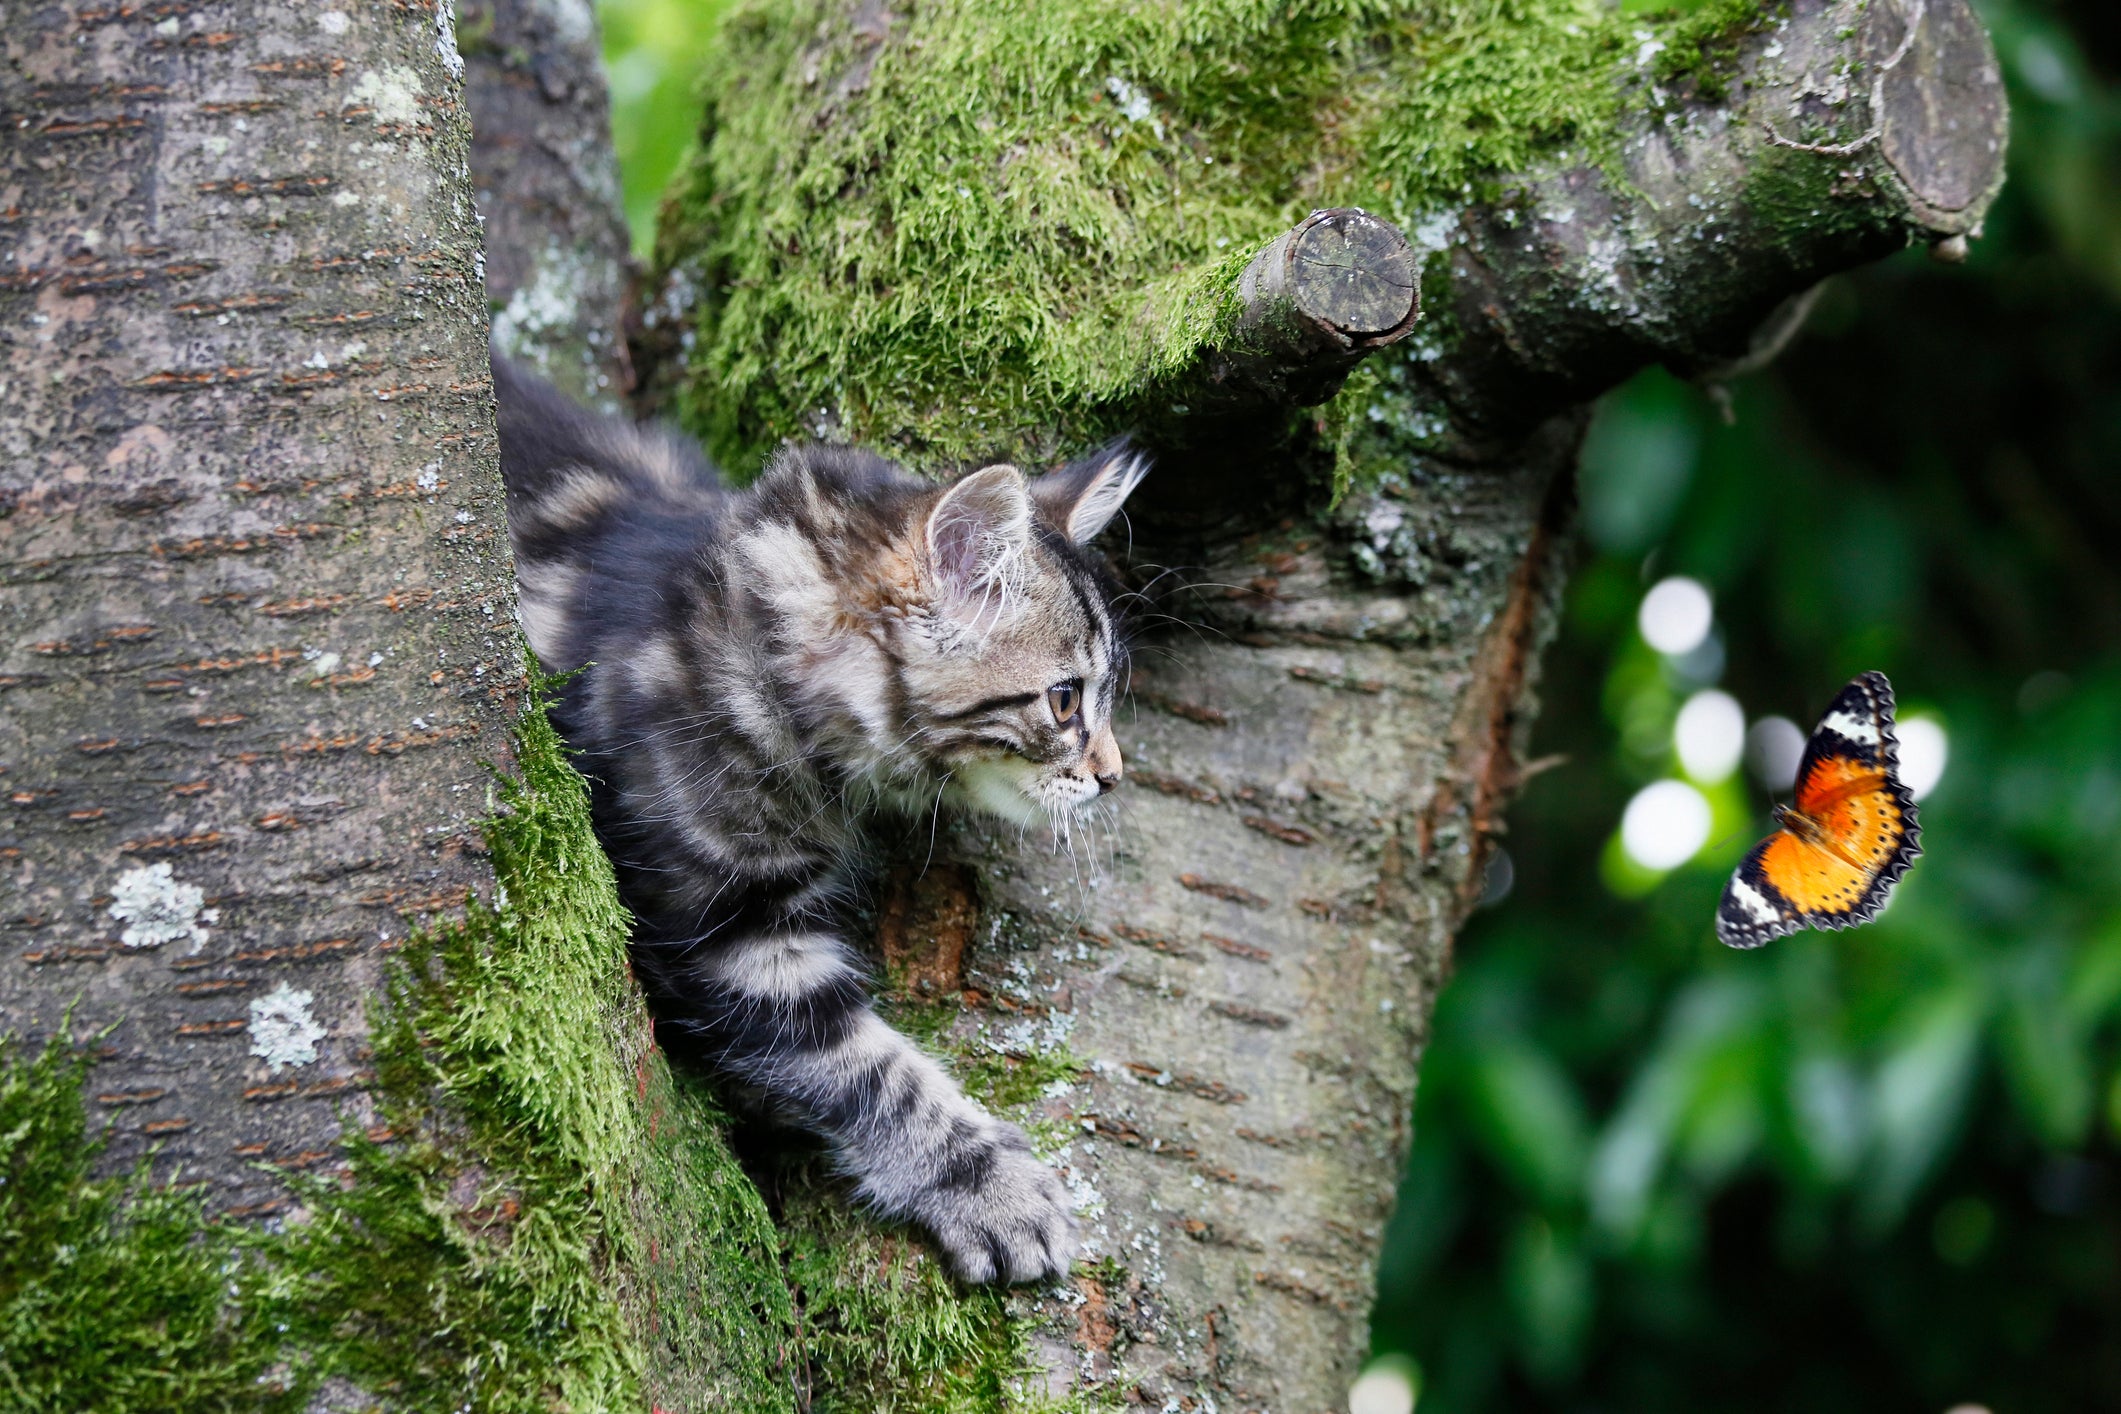 comportamento felino: gato caçador tentando pegar uma borboleta